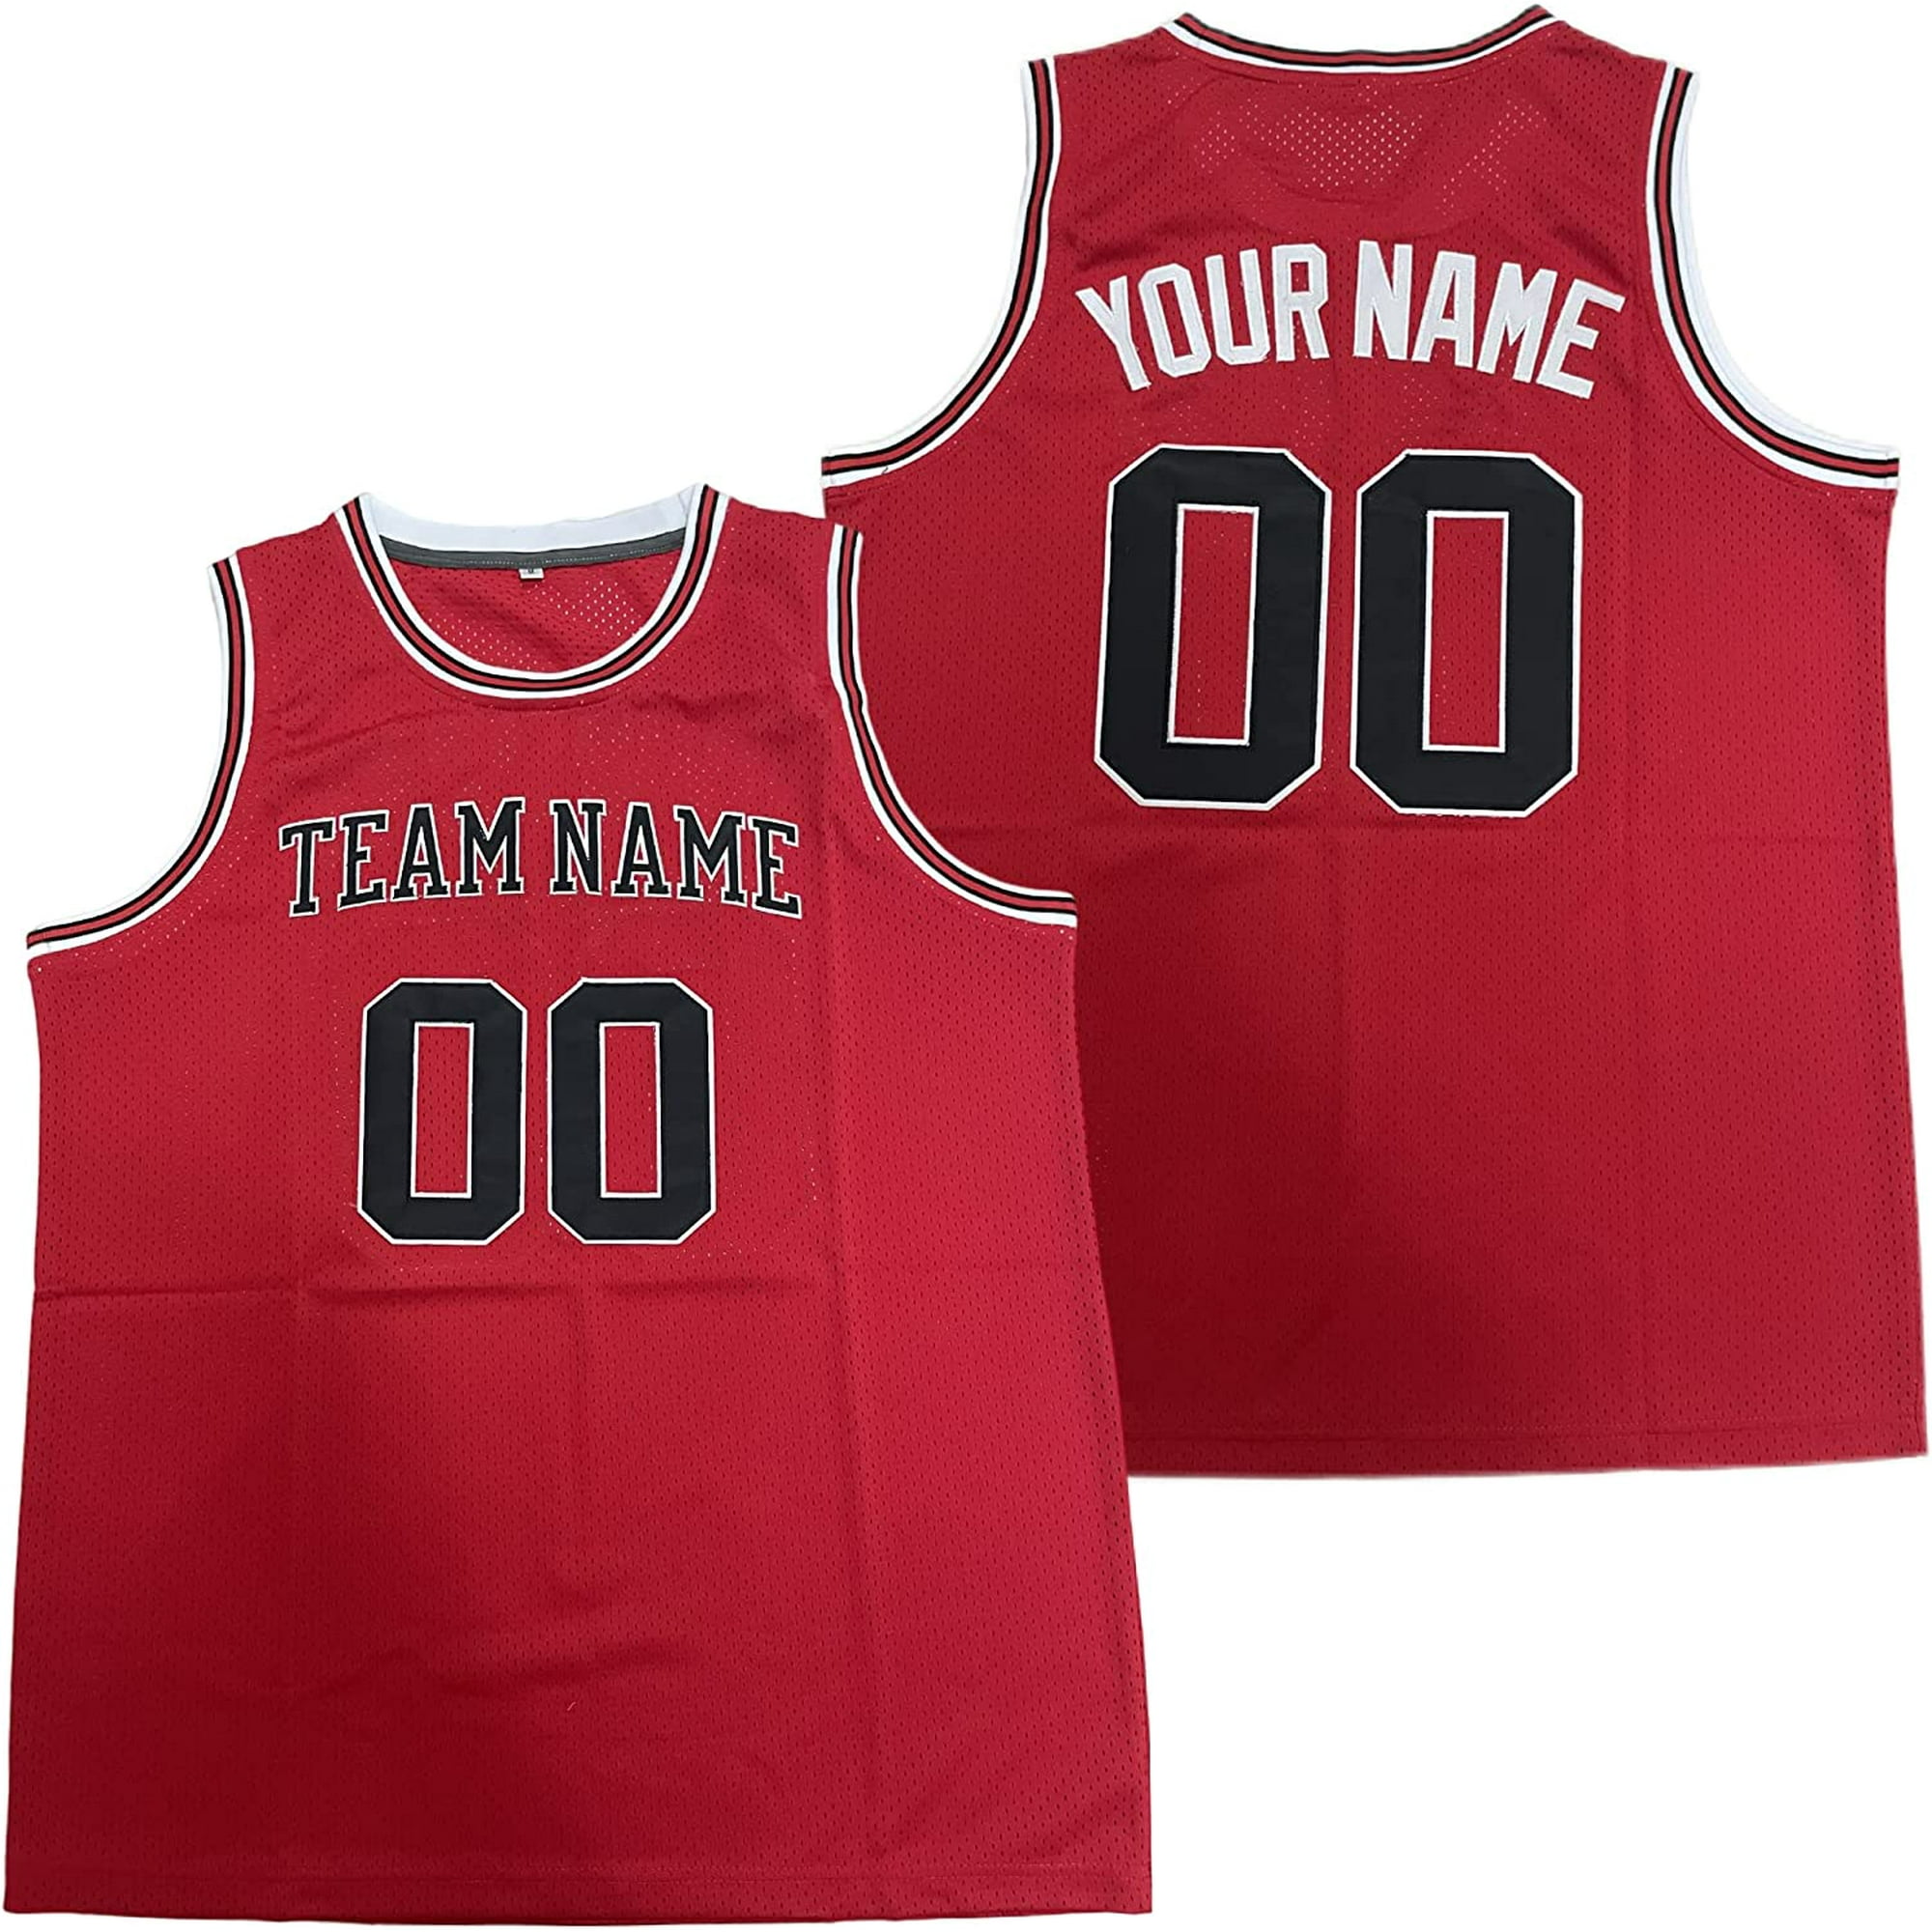  Custom Basketball Jersey 90's Hip Hop Stitched